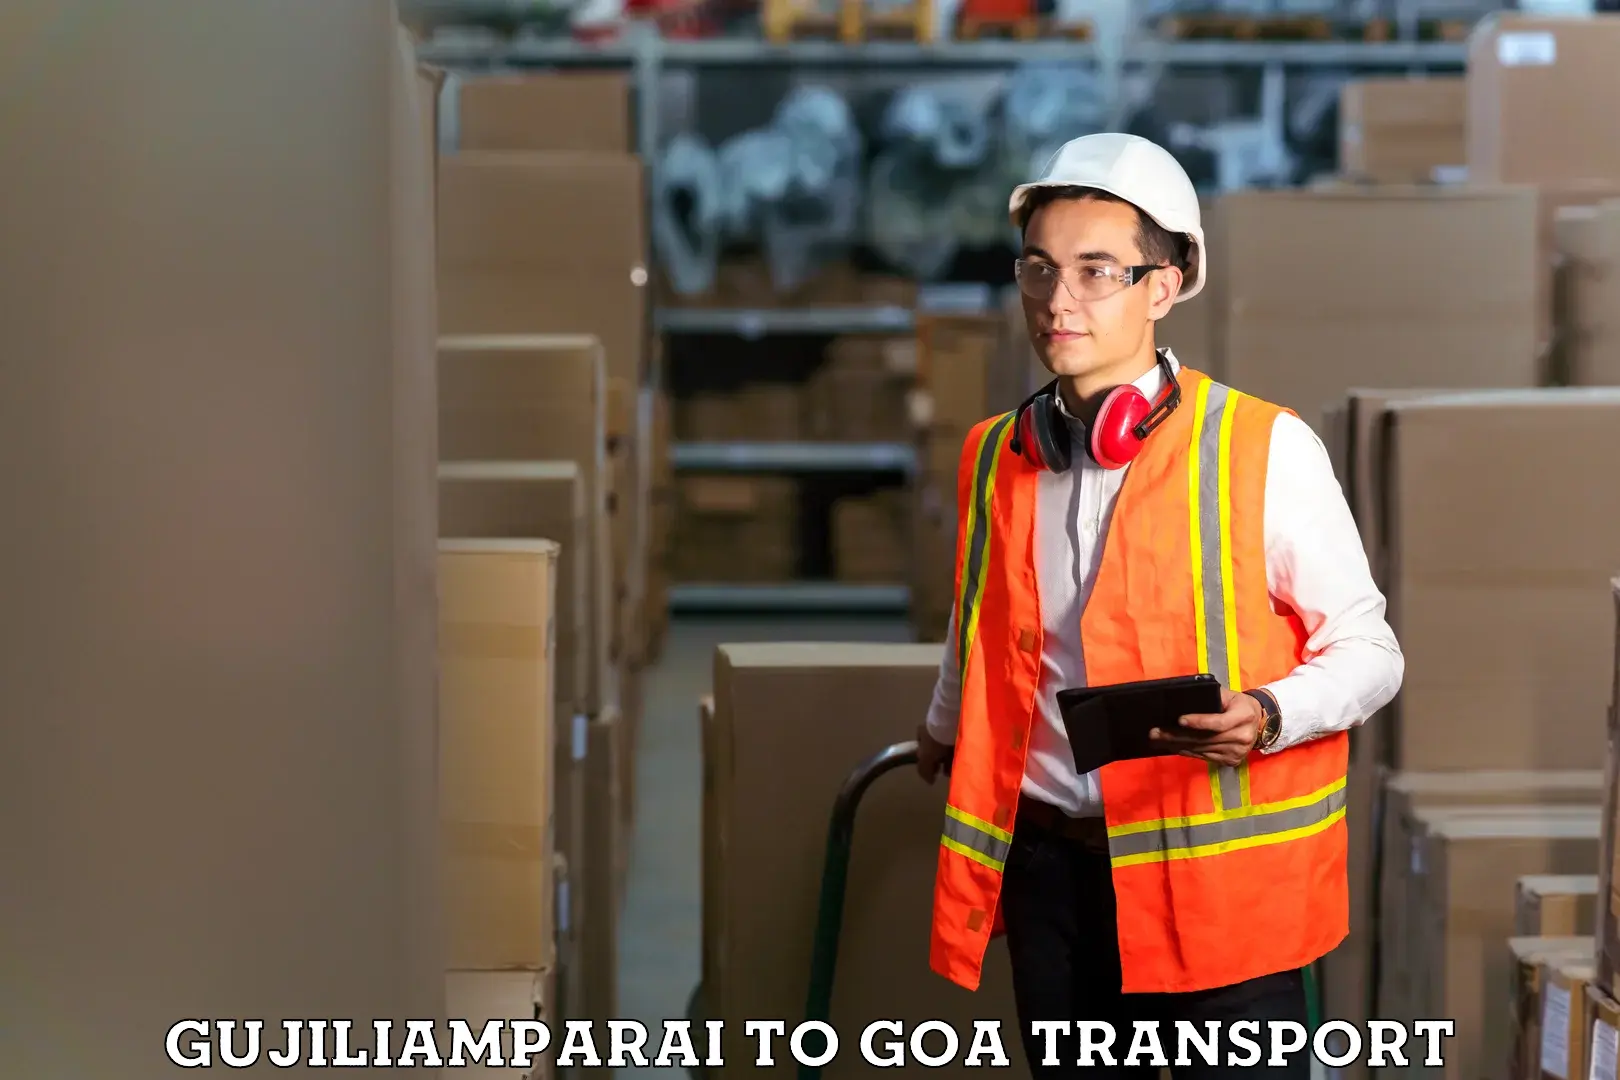 Cycle transportation service Gujiliamparai to IIT Goa